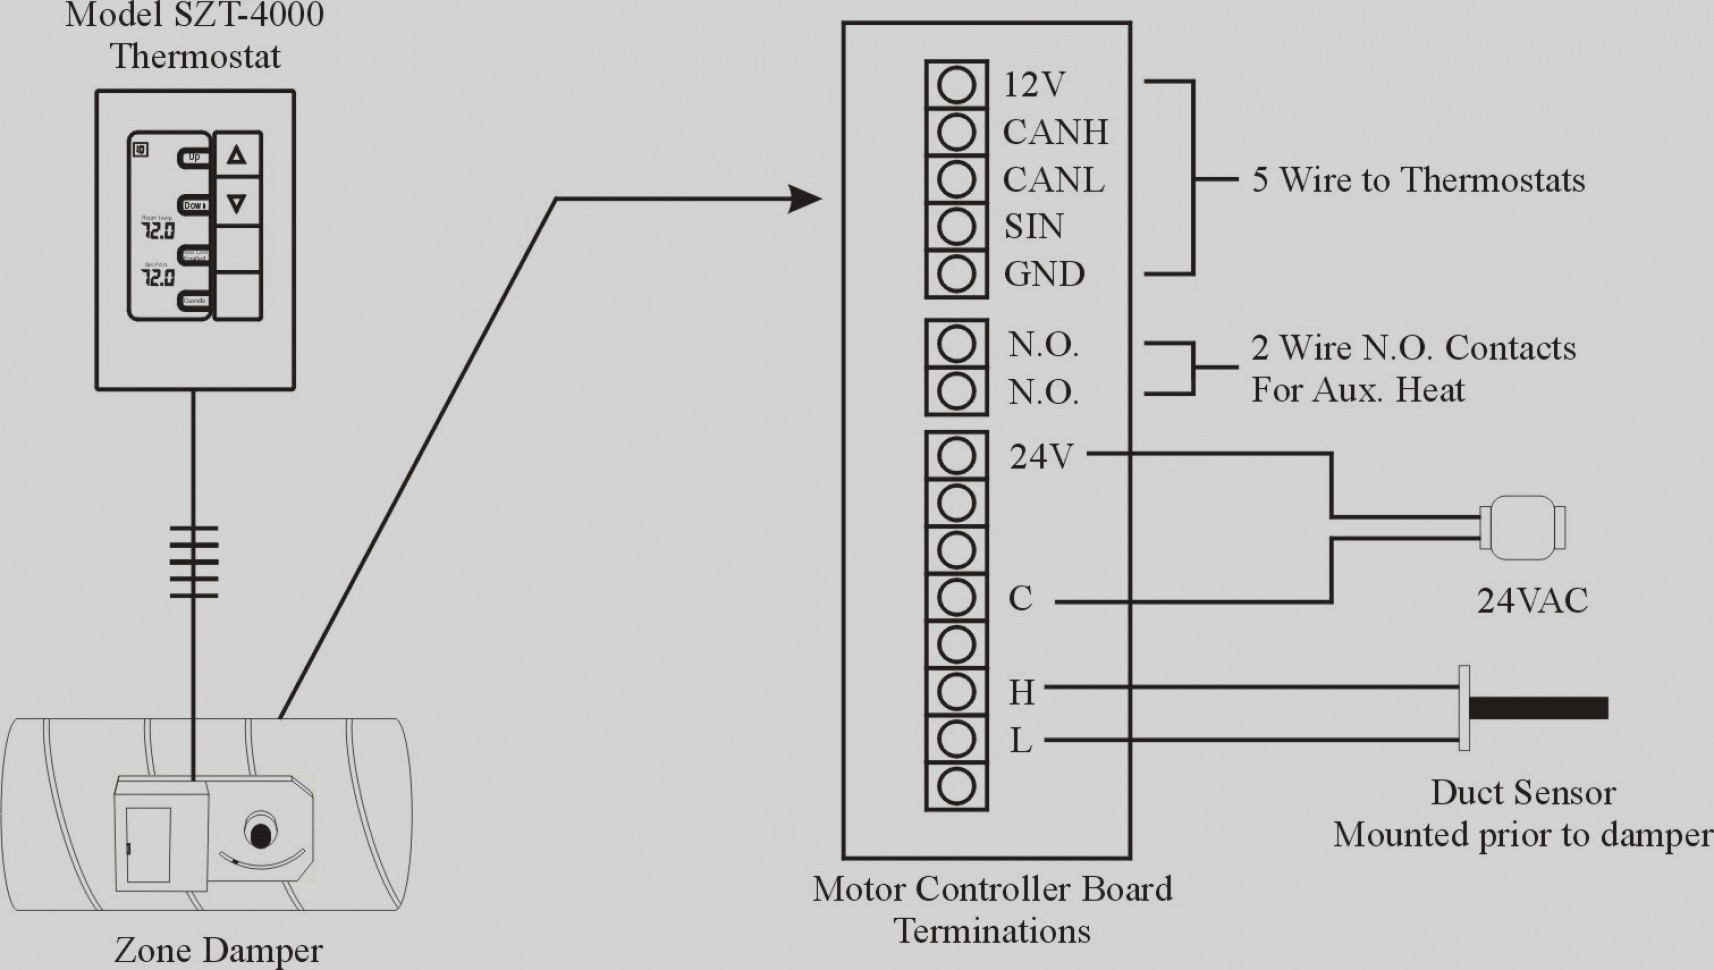 2 wire smoke detector wiring diagram Collection Inspirational Dsc 4 Wire Smoke Alarm Wiring Diagram